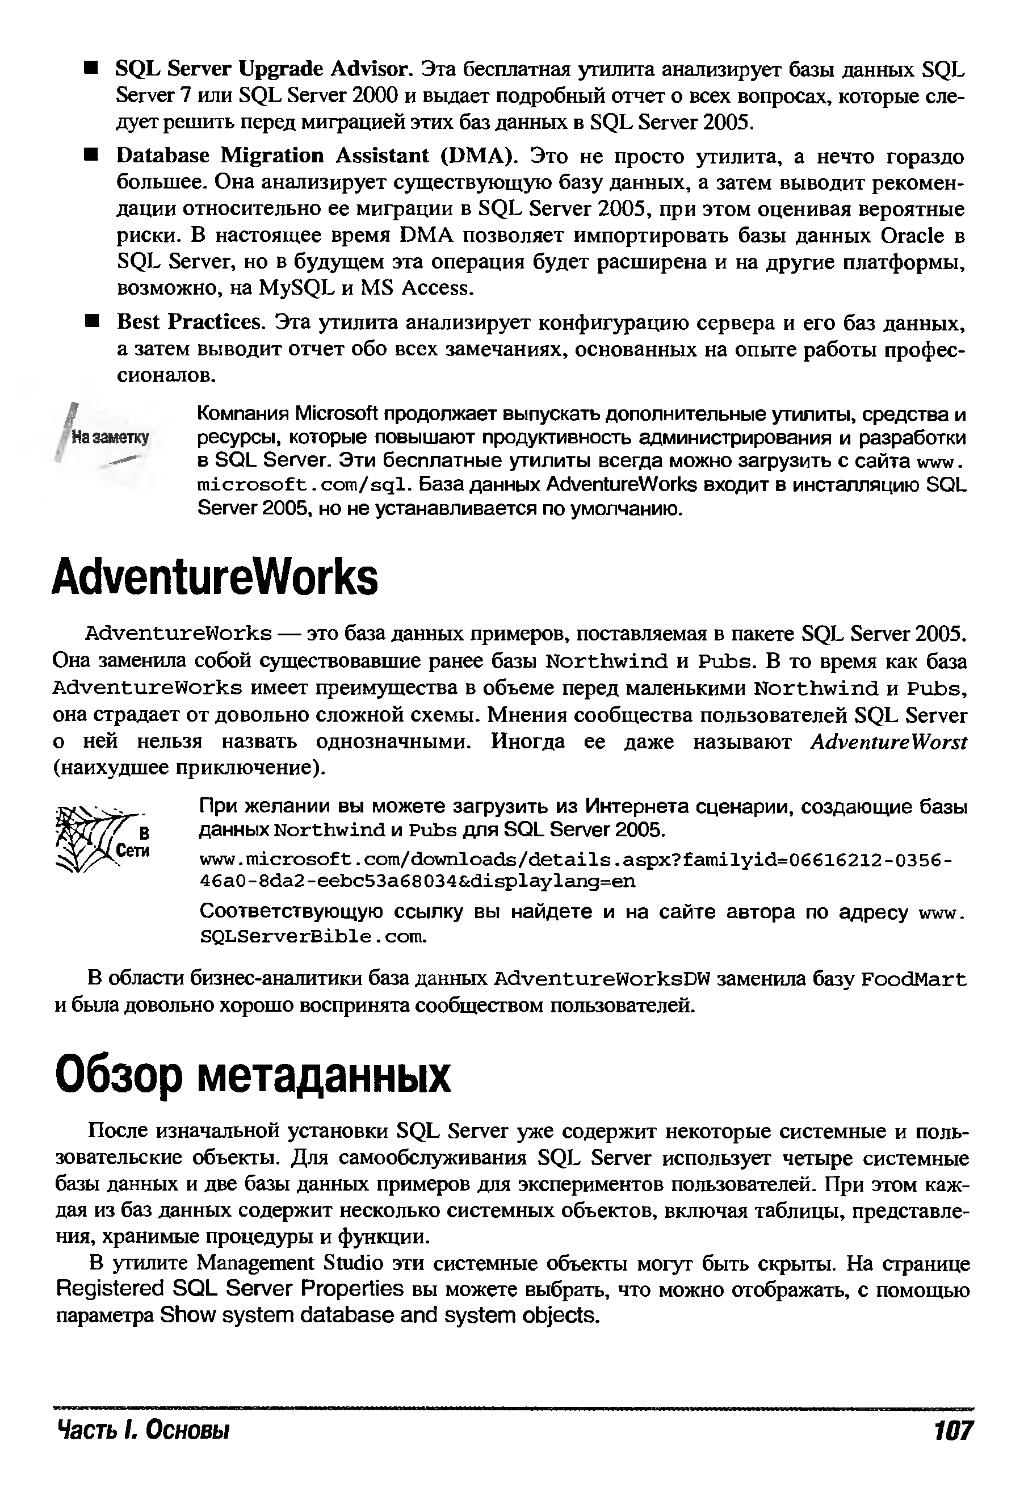 AdventureWorks
Обзор метаданных